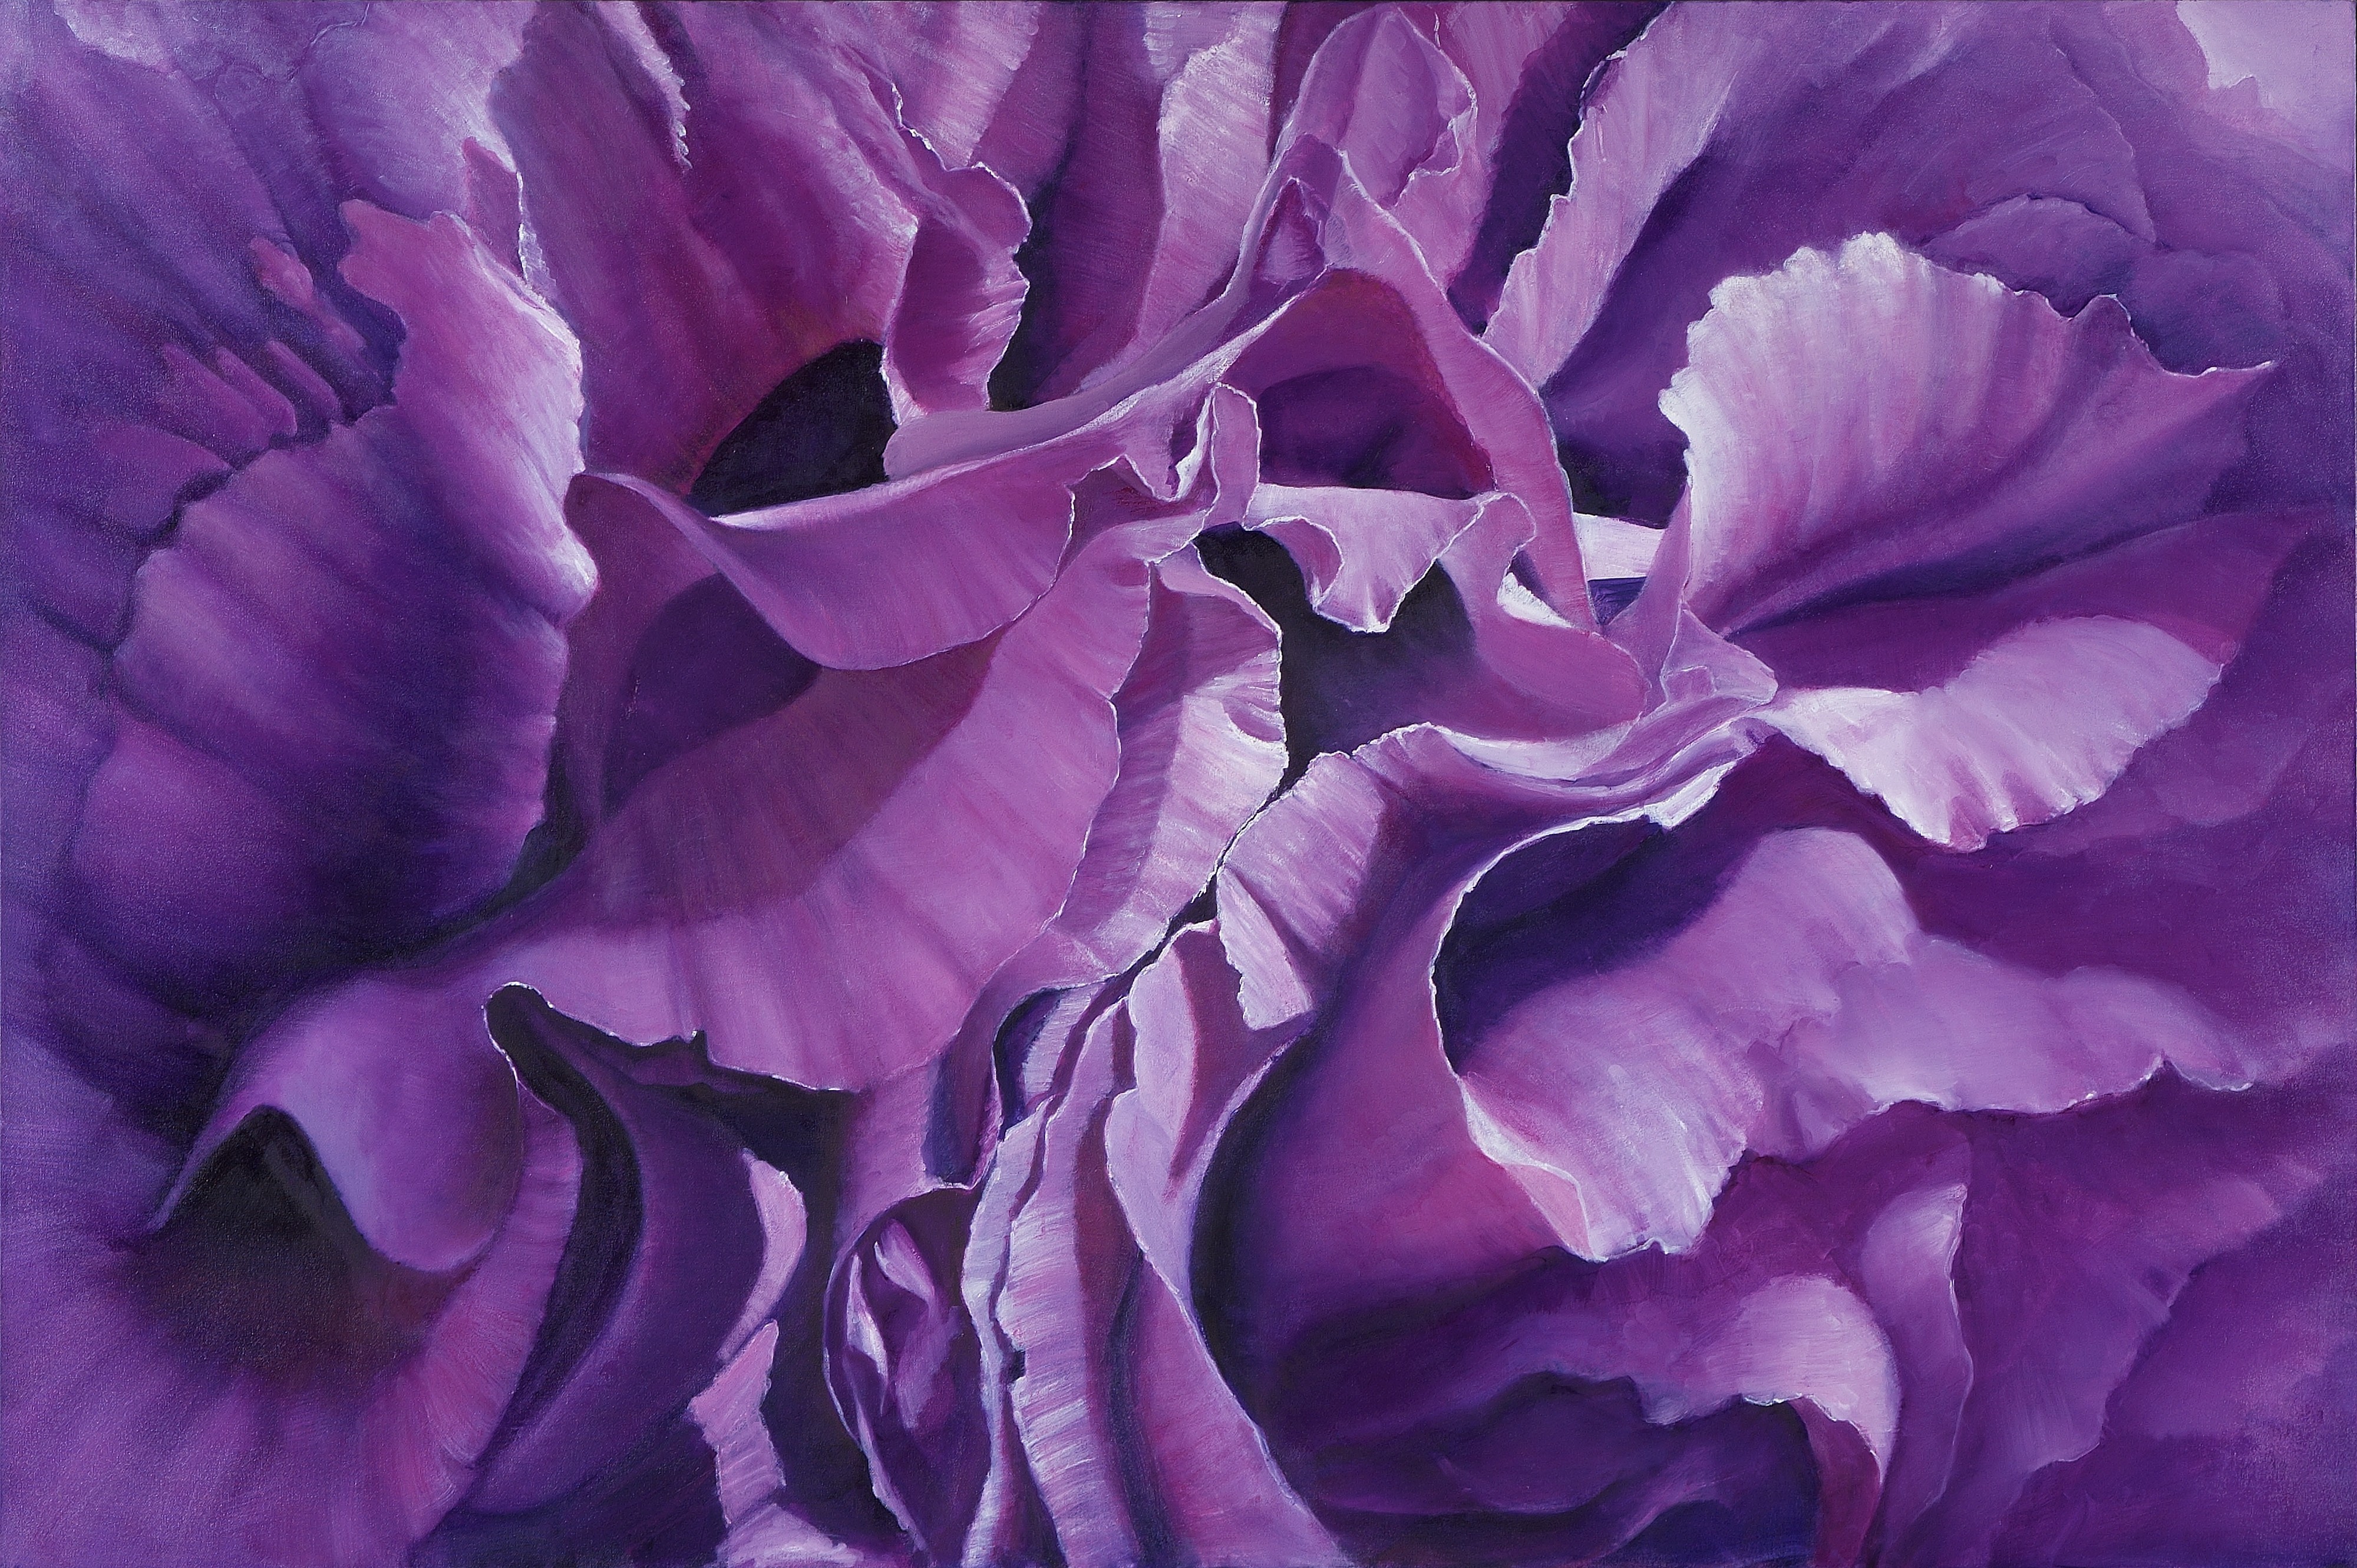 Deep purple 120 x 180 cm Available